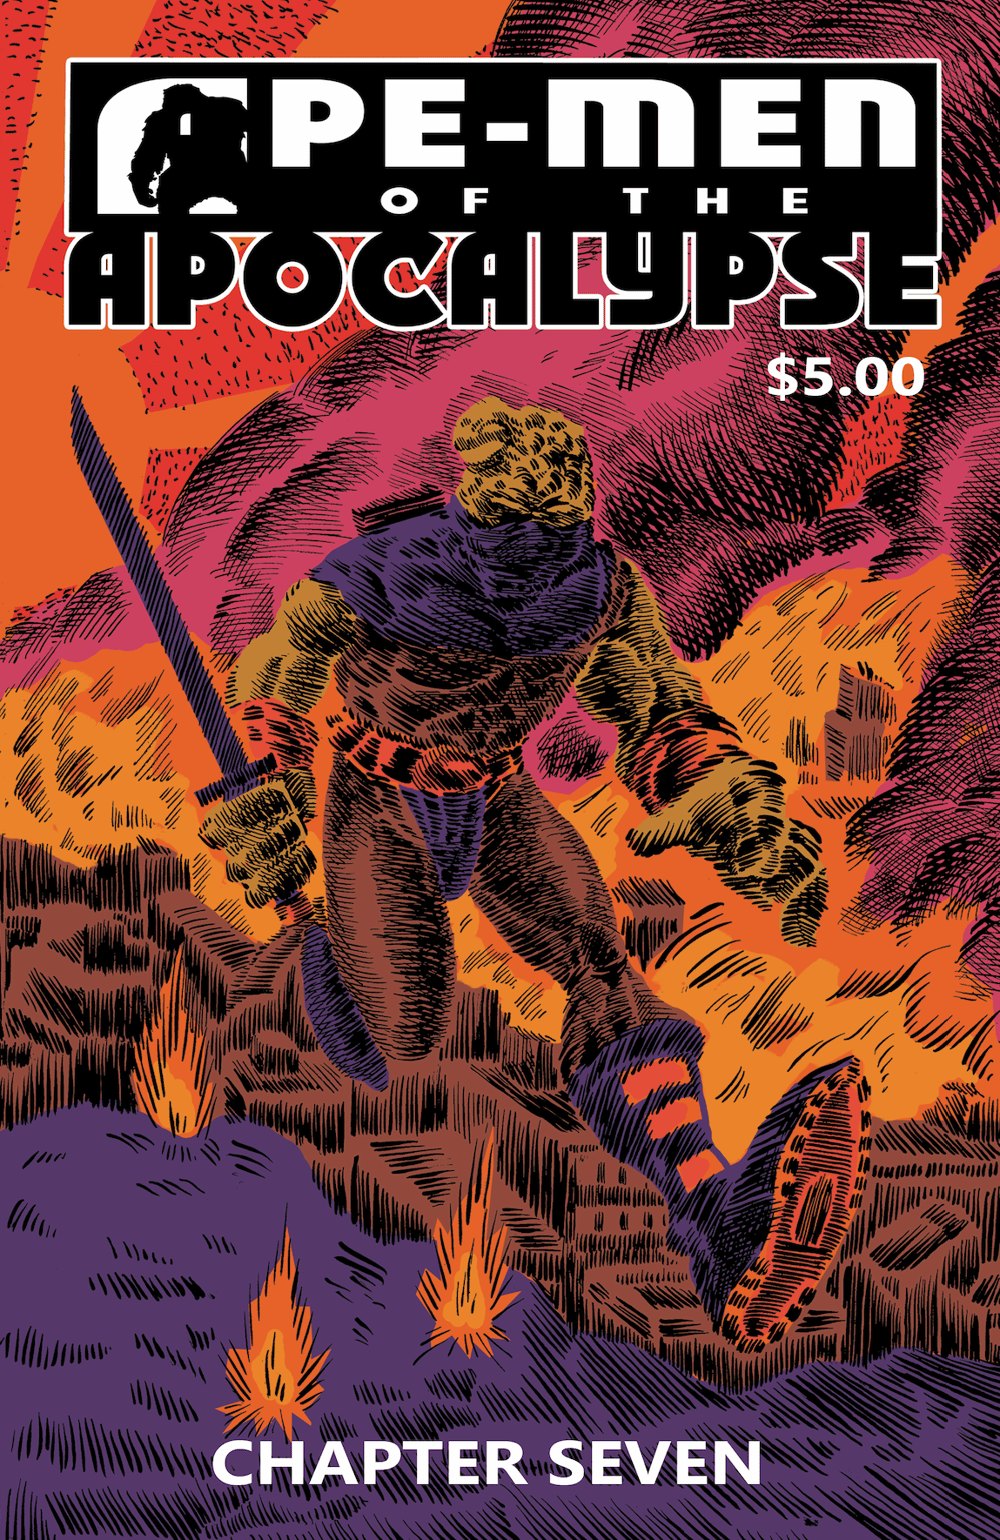 Ape-Men of the Apocalypse #7